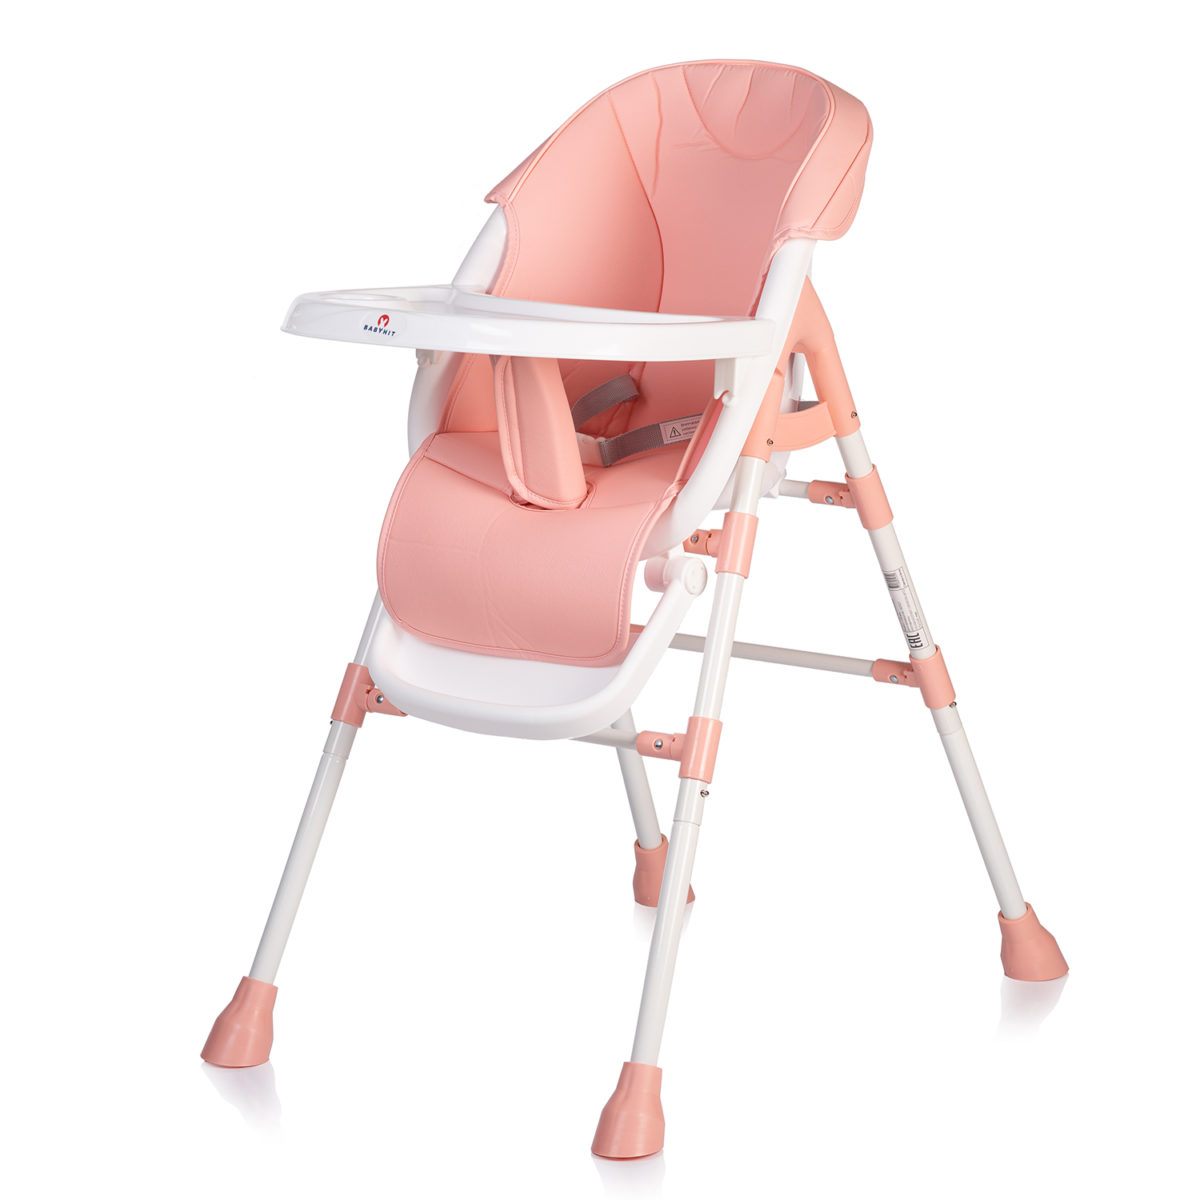 Baby style стульчик для кормления